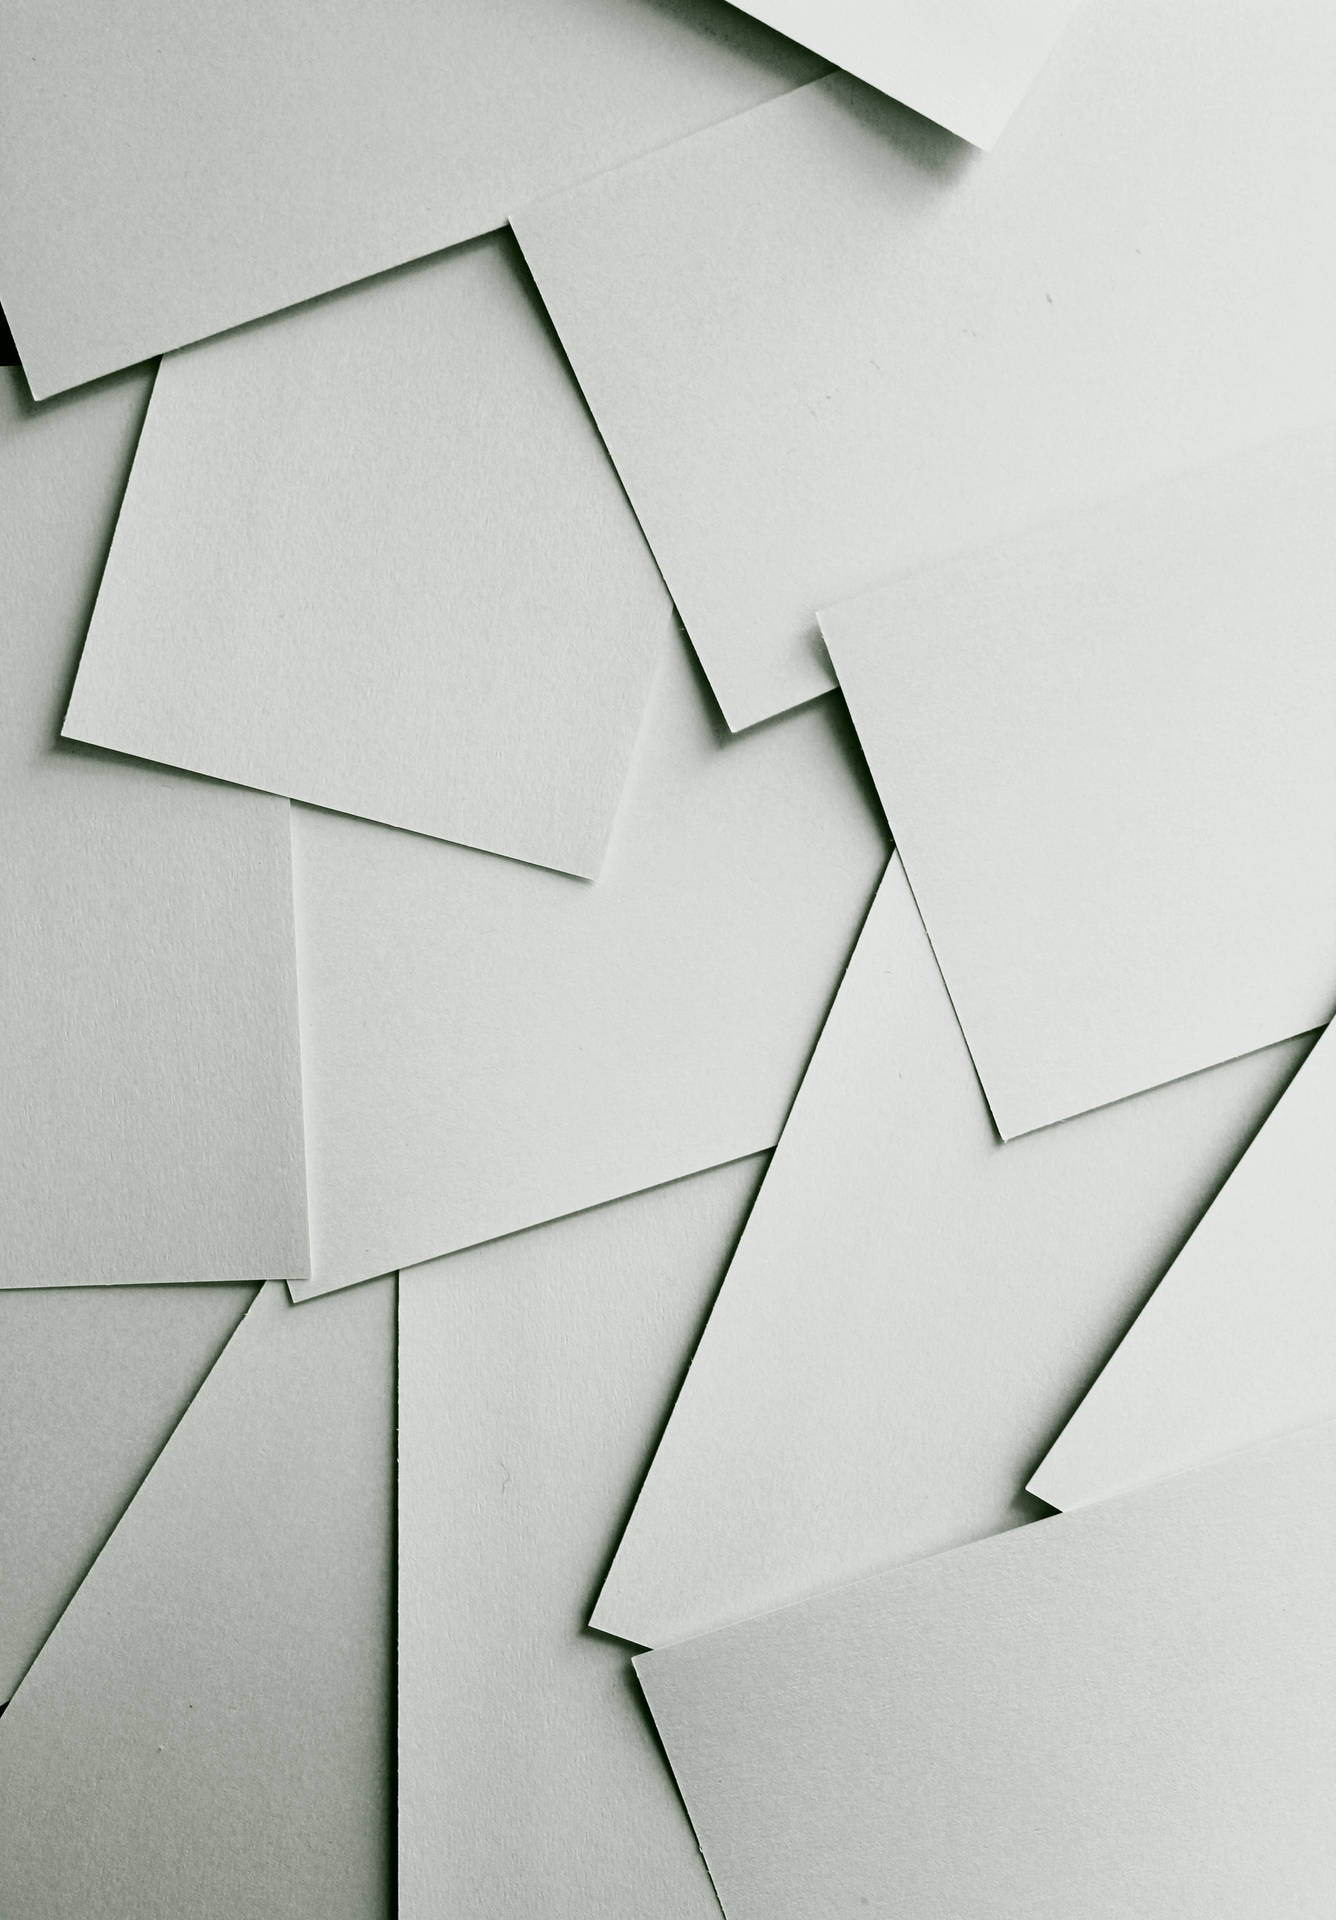 Abstract Paper Design Wallpaper